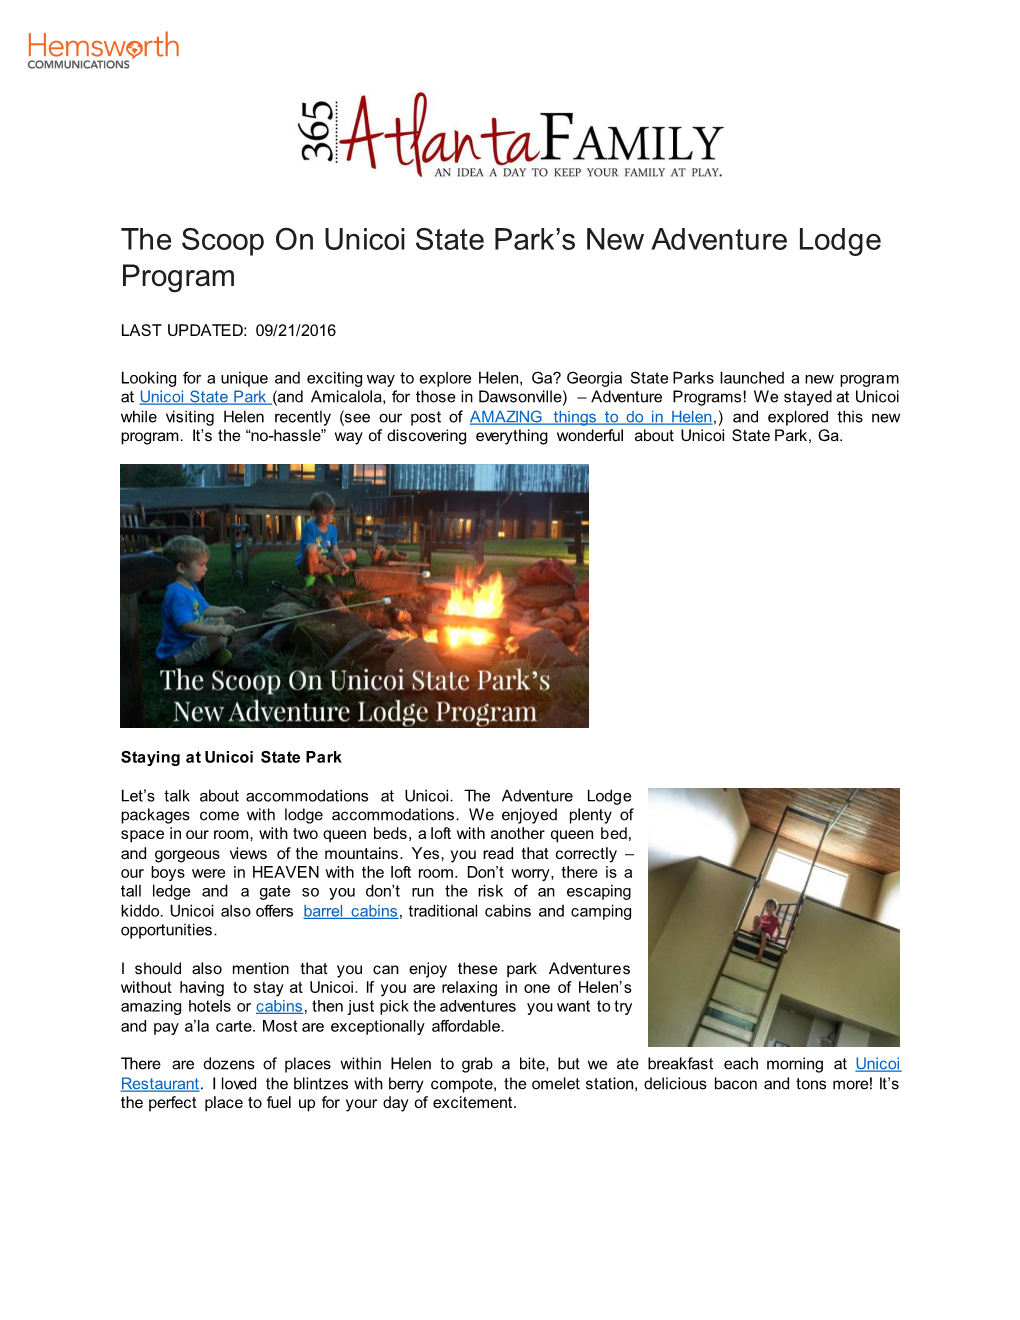 The Scoop on Unicoi State Park's New Adventure Lodge Program